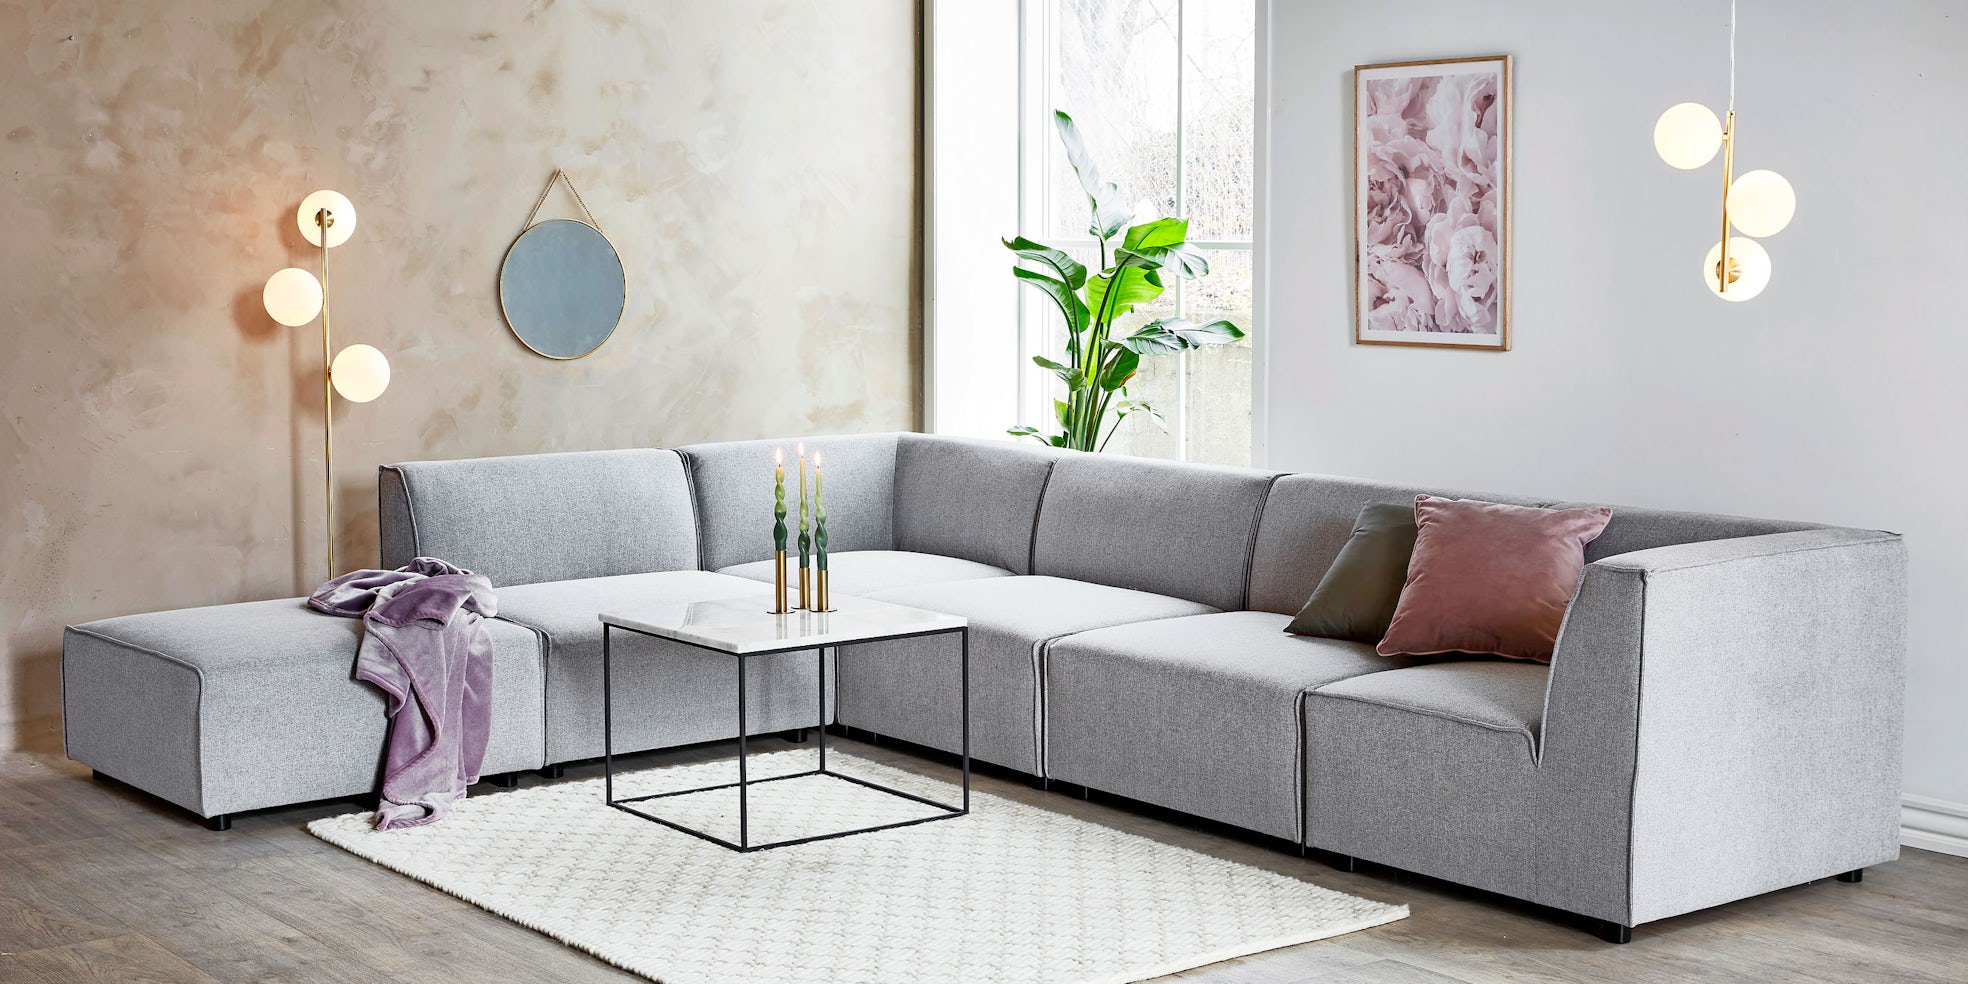 renser man en sofa? | Find svaret føtex.dk